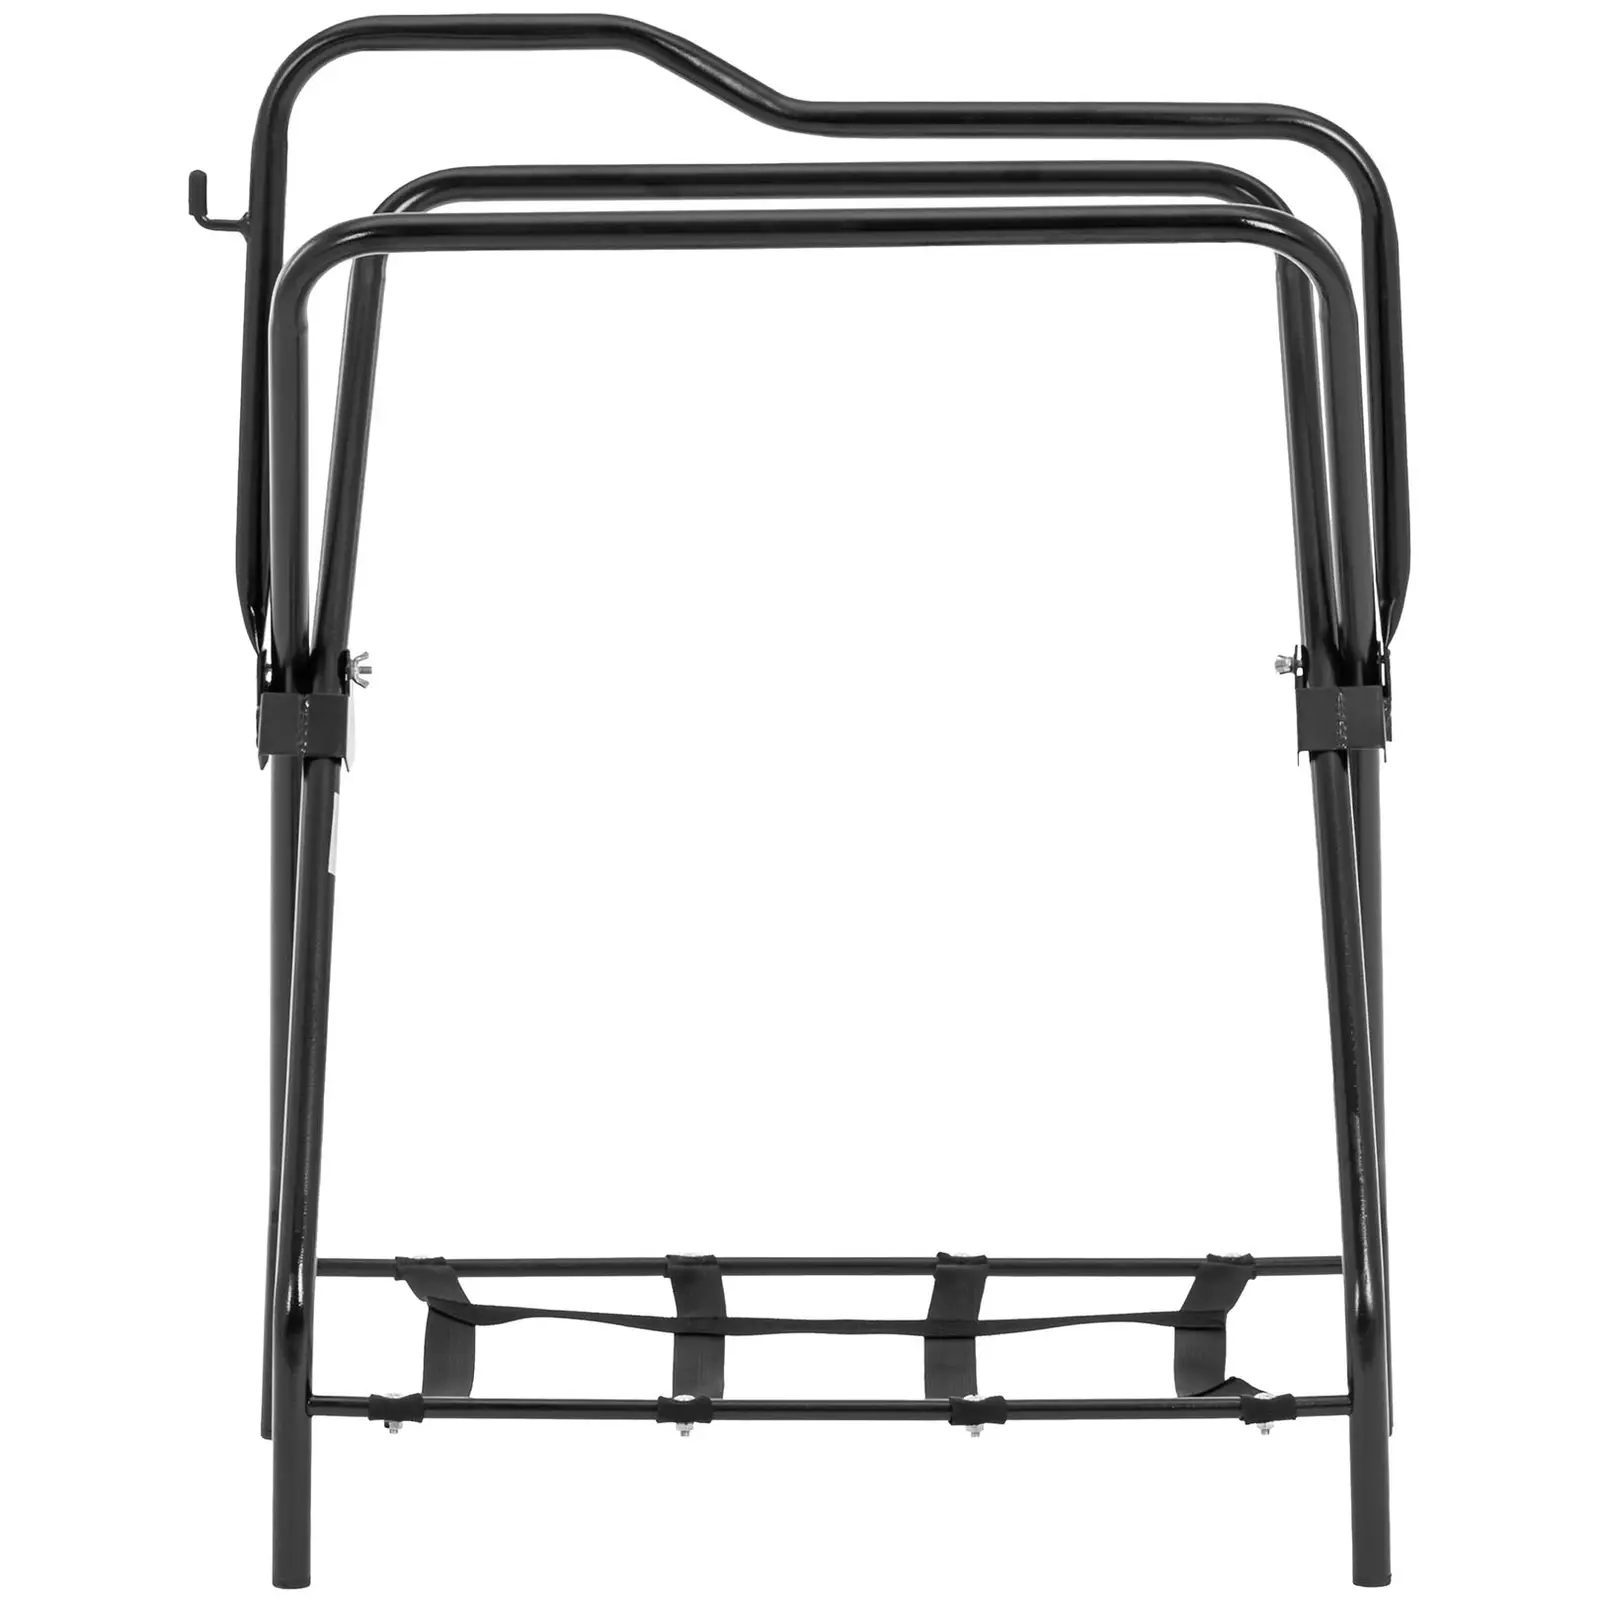 Saddle Rack - free standing - folding - steel - 80 kg